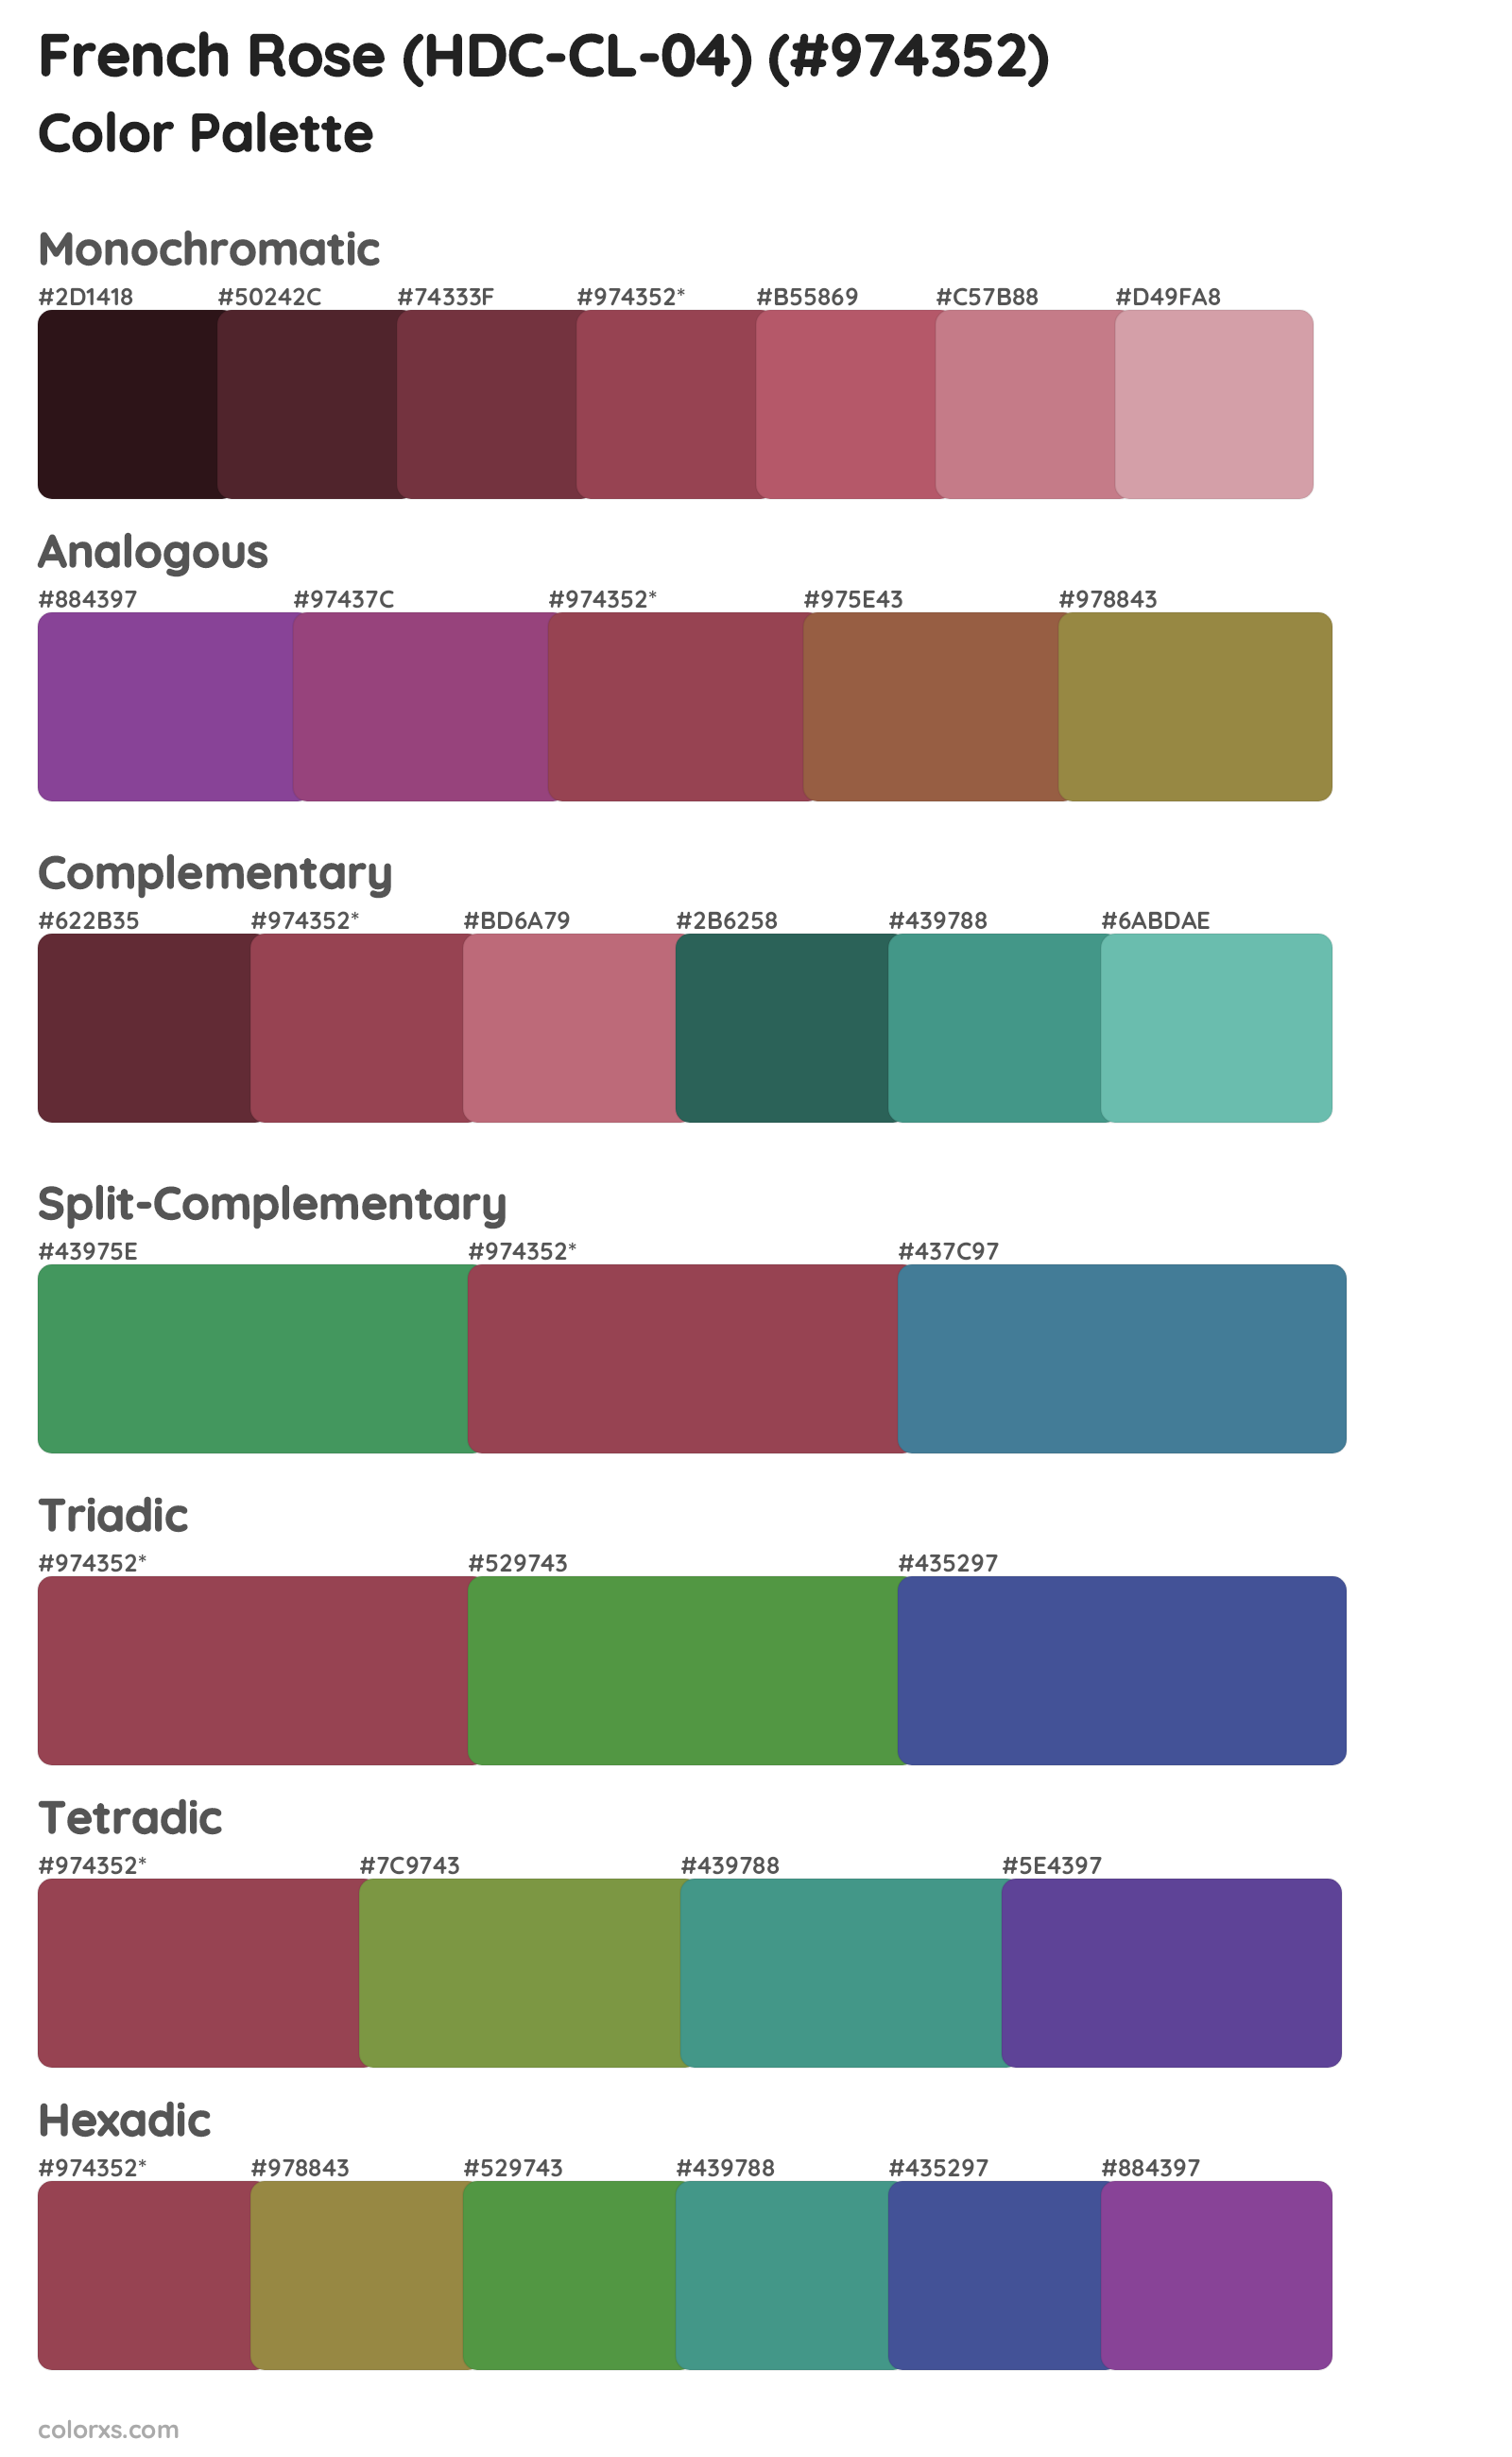 French Rose (HDC-CL-04) Color Scheme Palettes